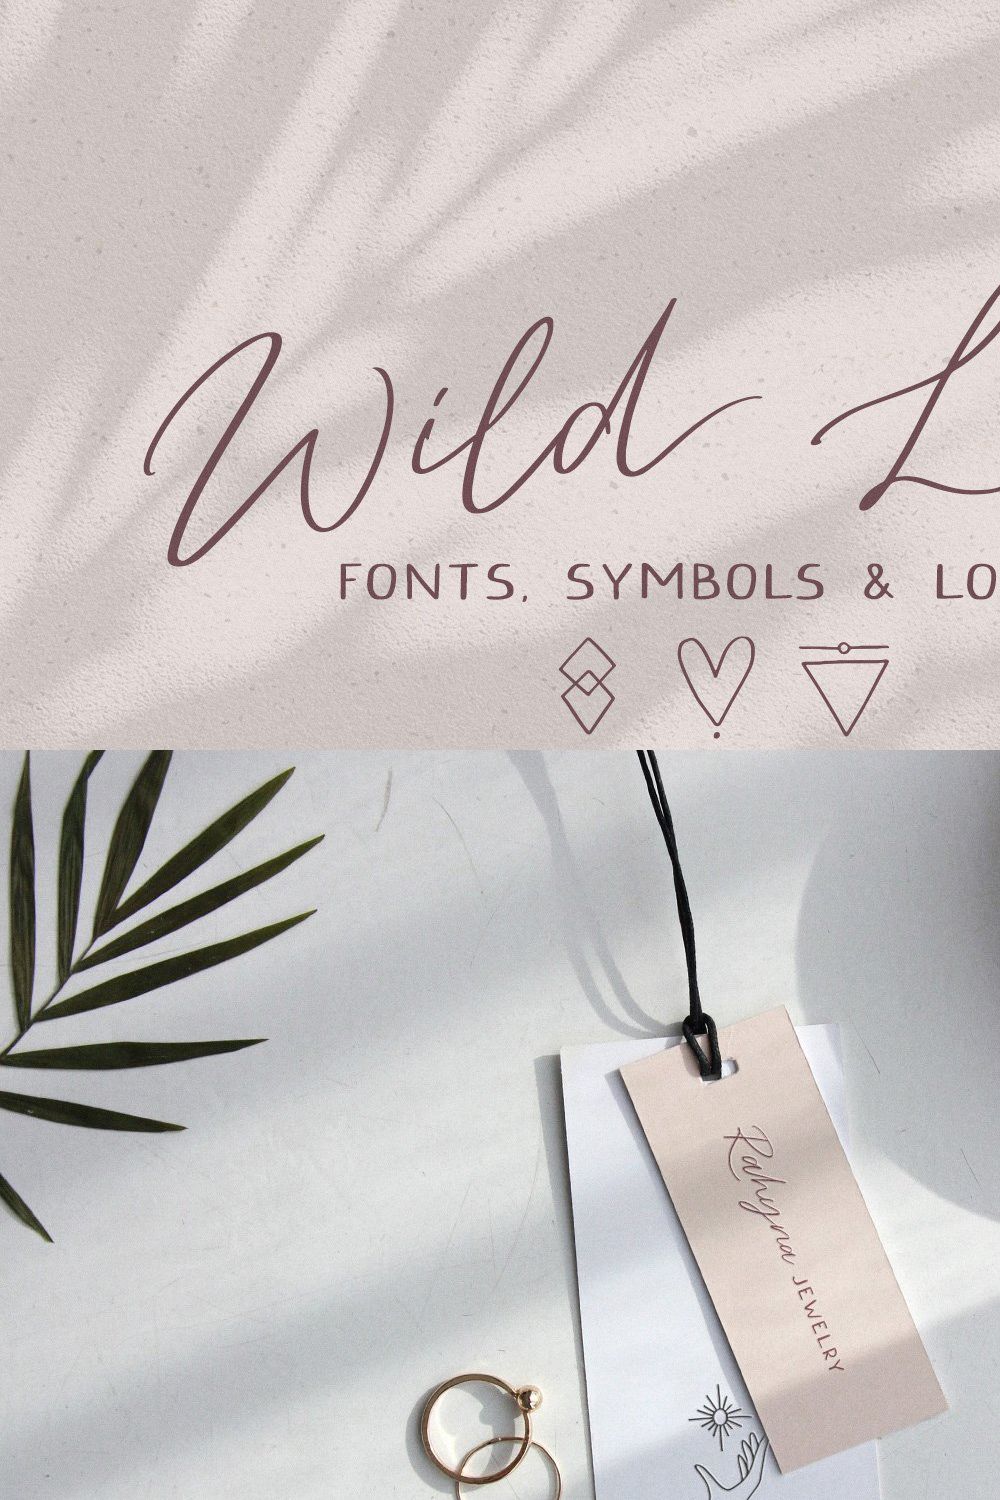 Script font Wild Love logos pinterest preview image.